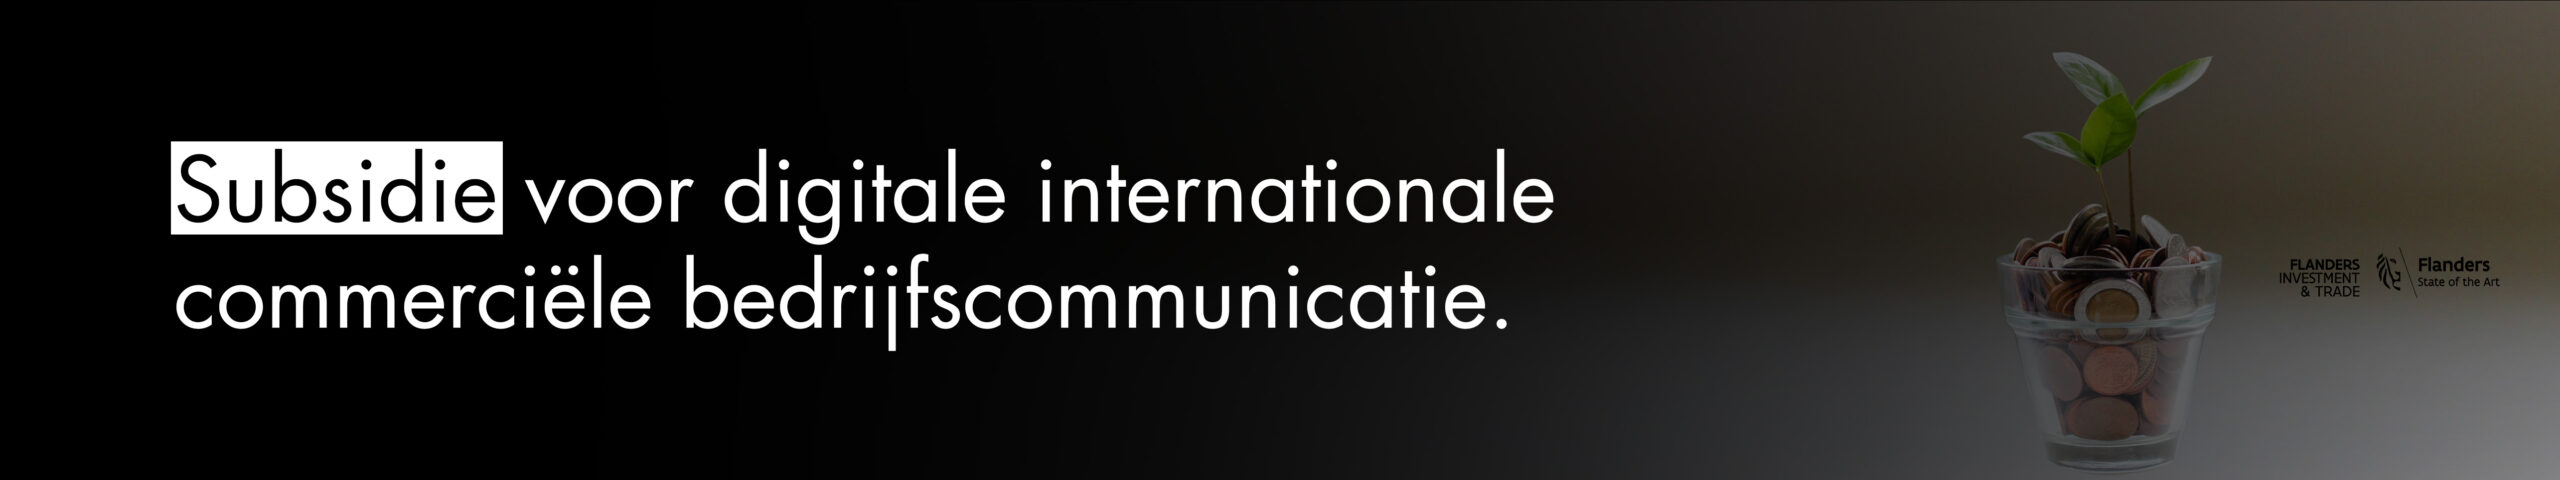 FIT-Subsidie voor digitale internationale commerciële bedrijfscommunicatie.